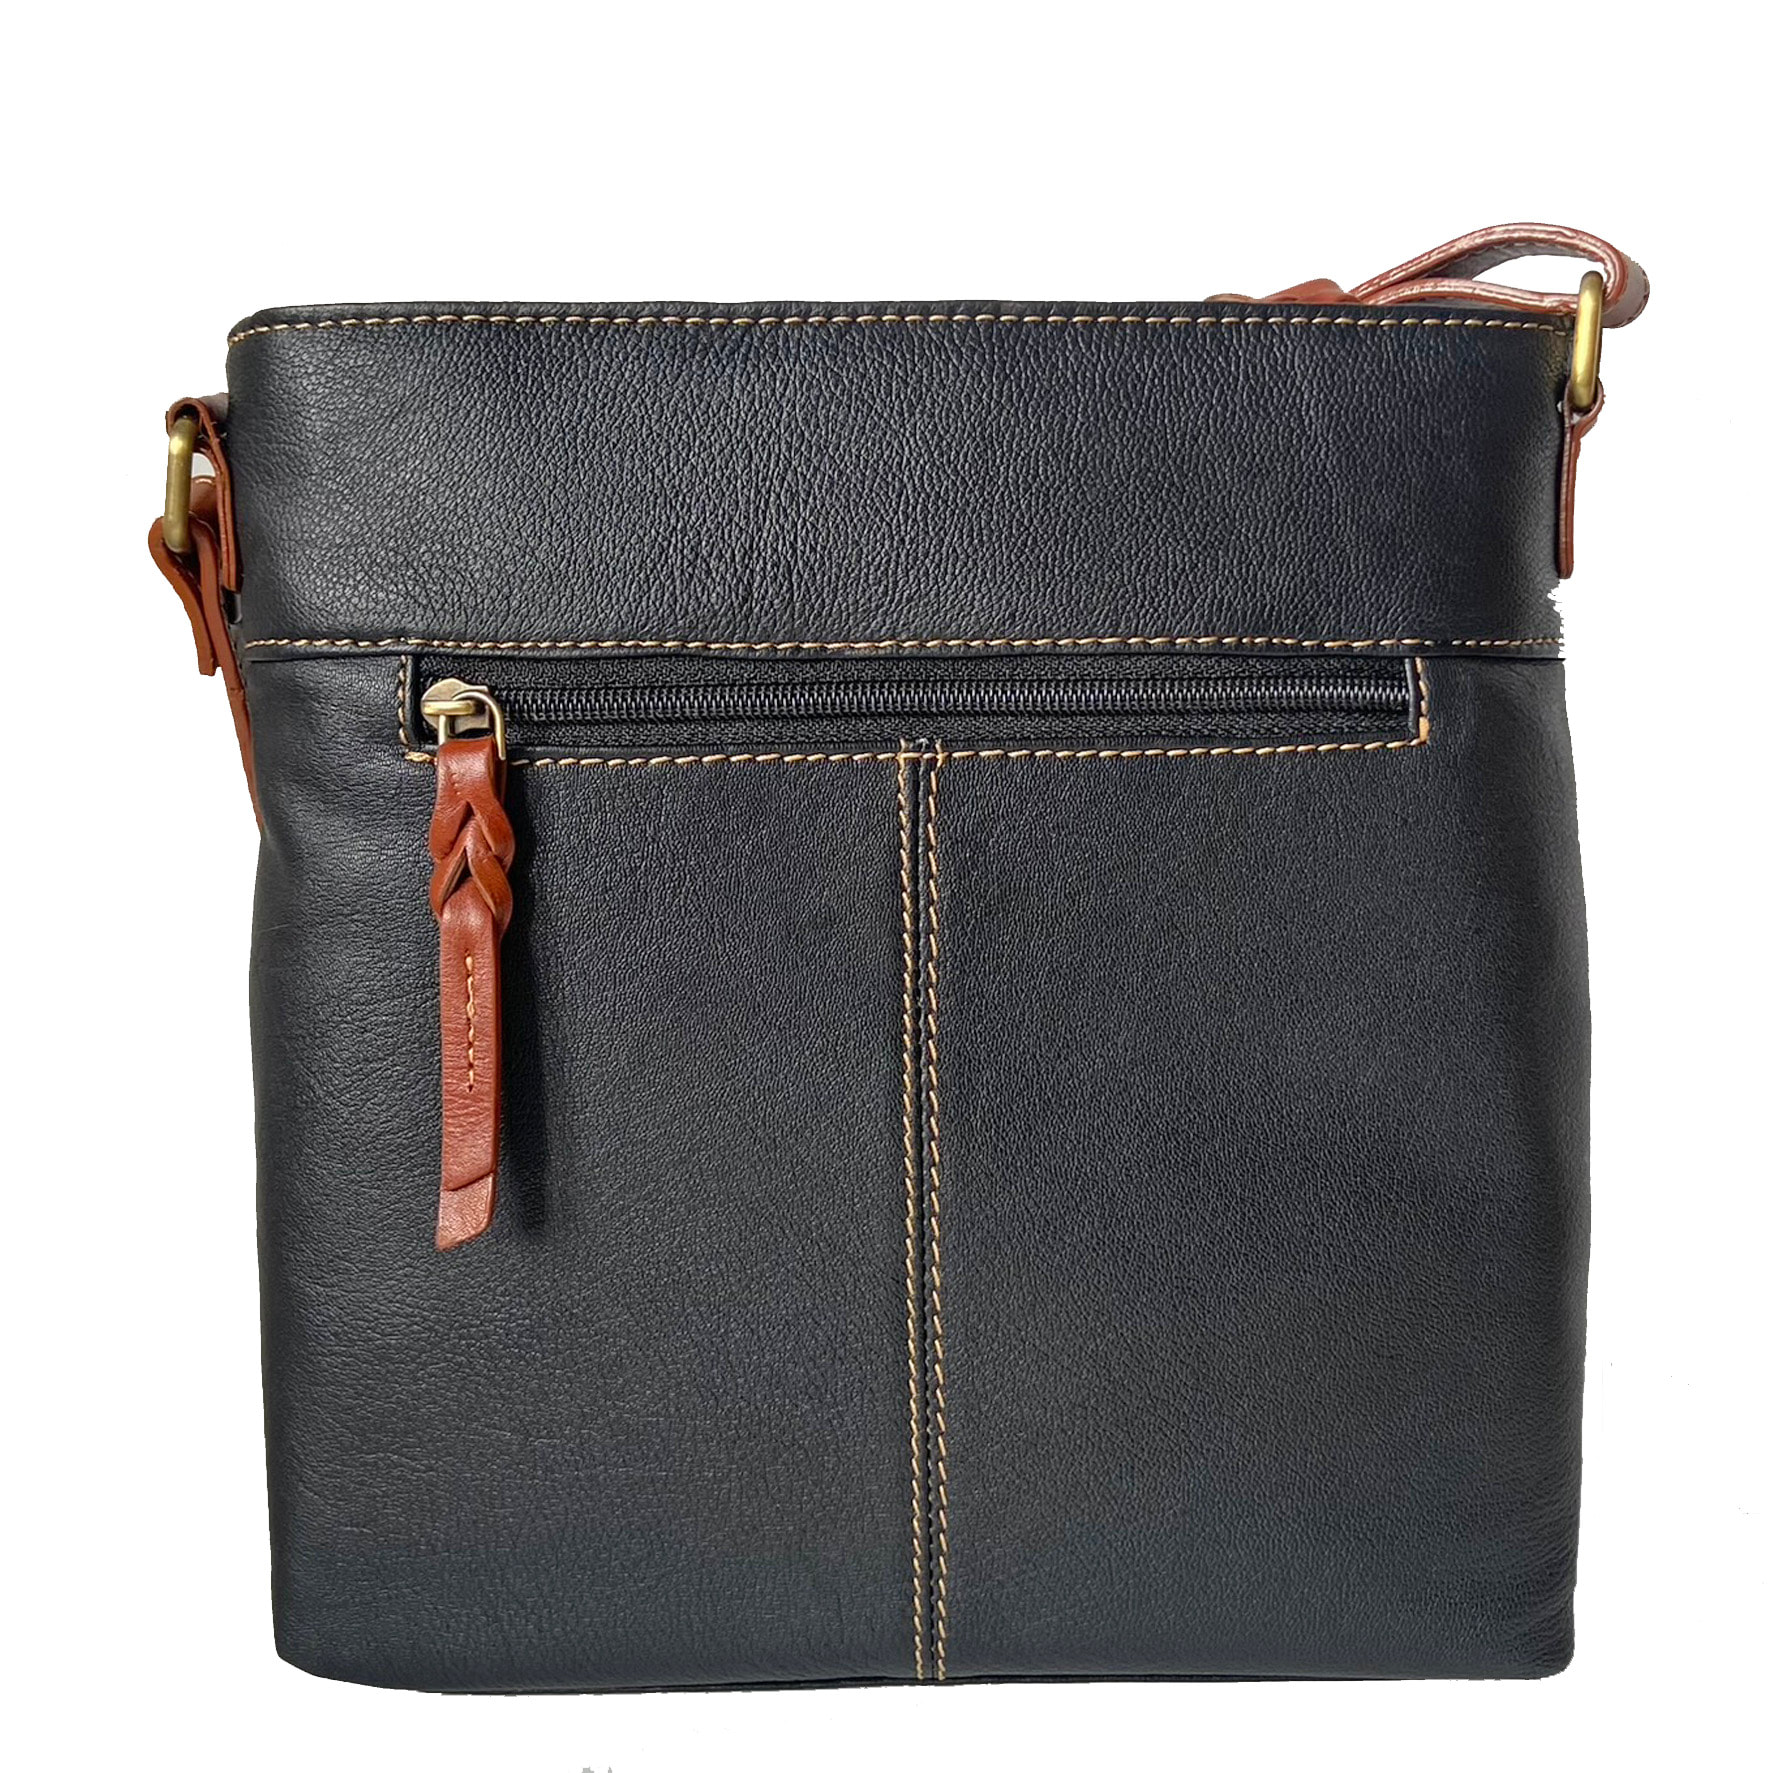 Rowallan Black and Tan Leather Shoulder Bag